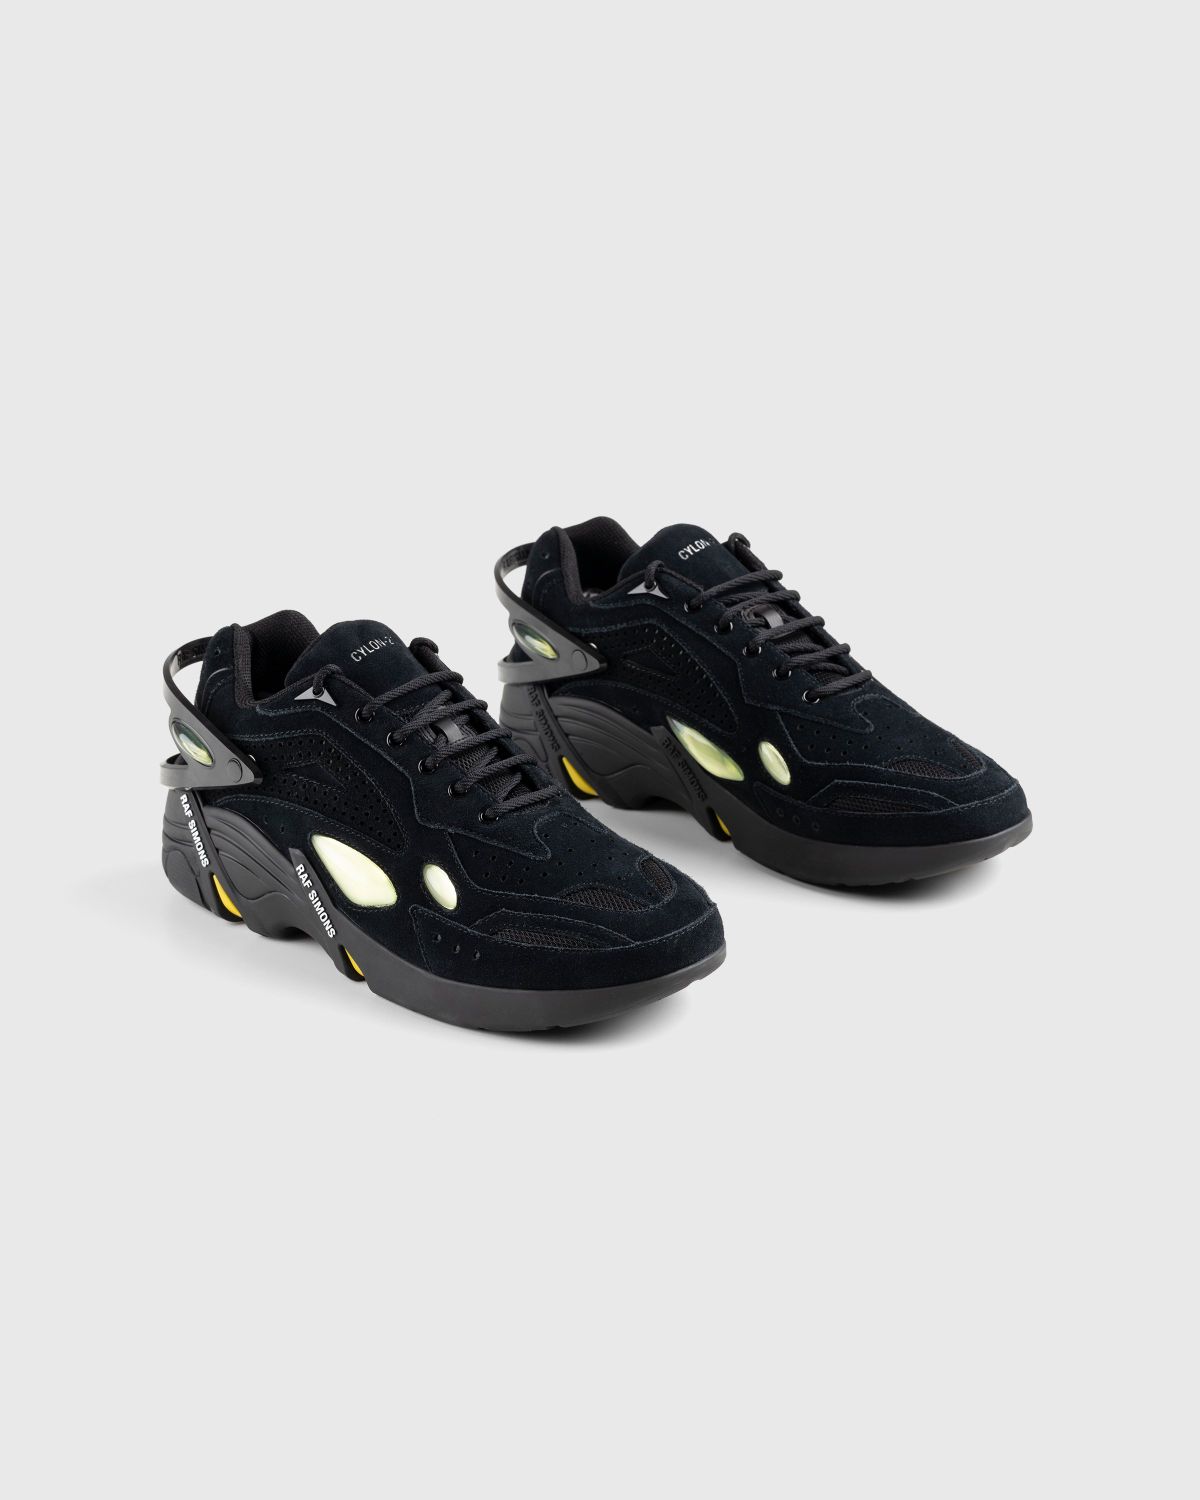 Raf Simons – Cylon 21 Black - Sneakers - Black - Image 3